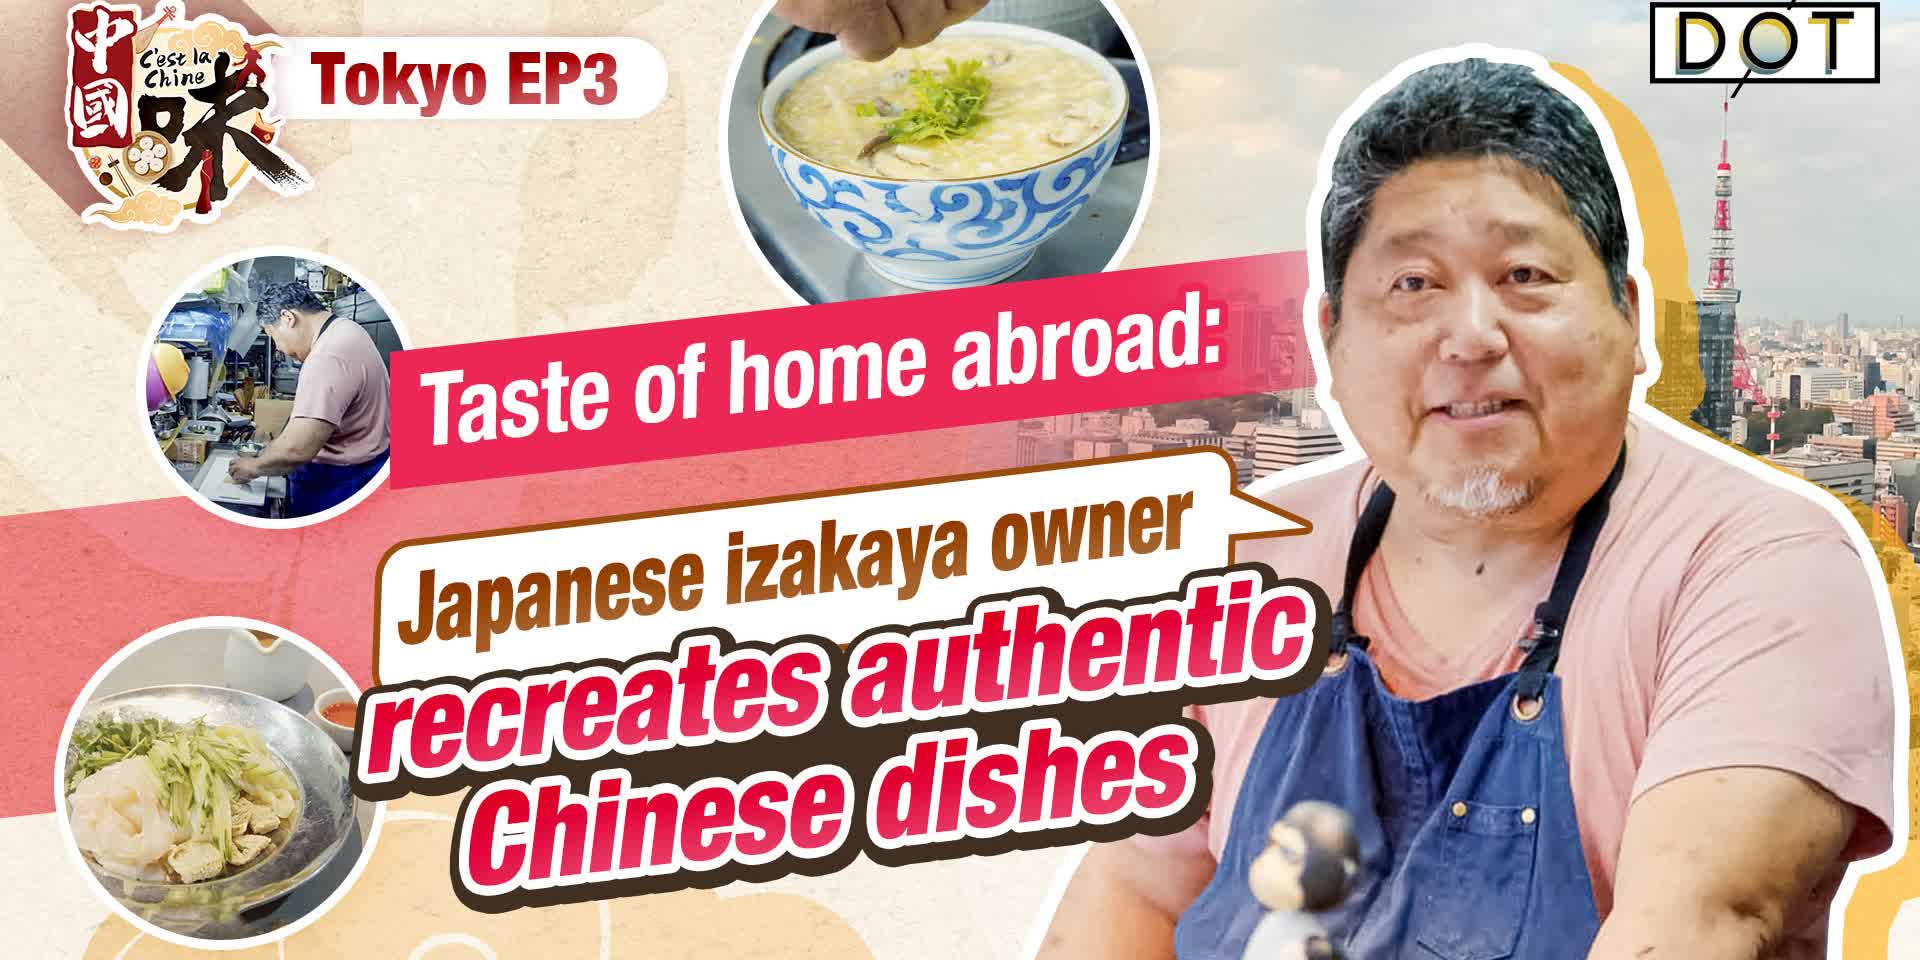 C'est la Chine · Tokyo EP3 | Taste of home abroad: Japanese izakaya owner recreates authentic Chinese dishes